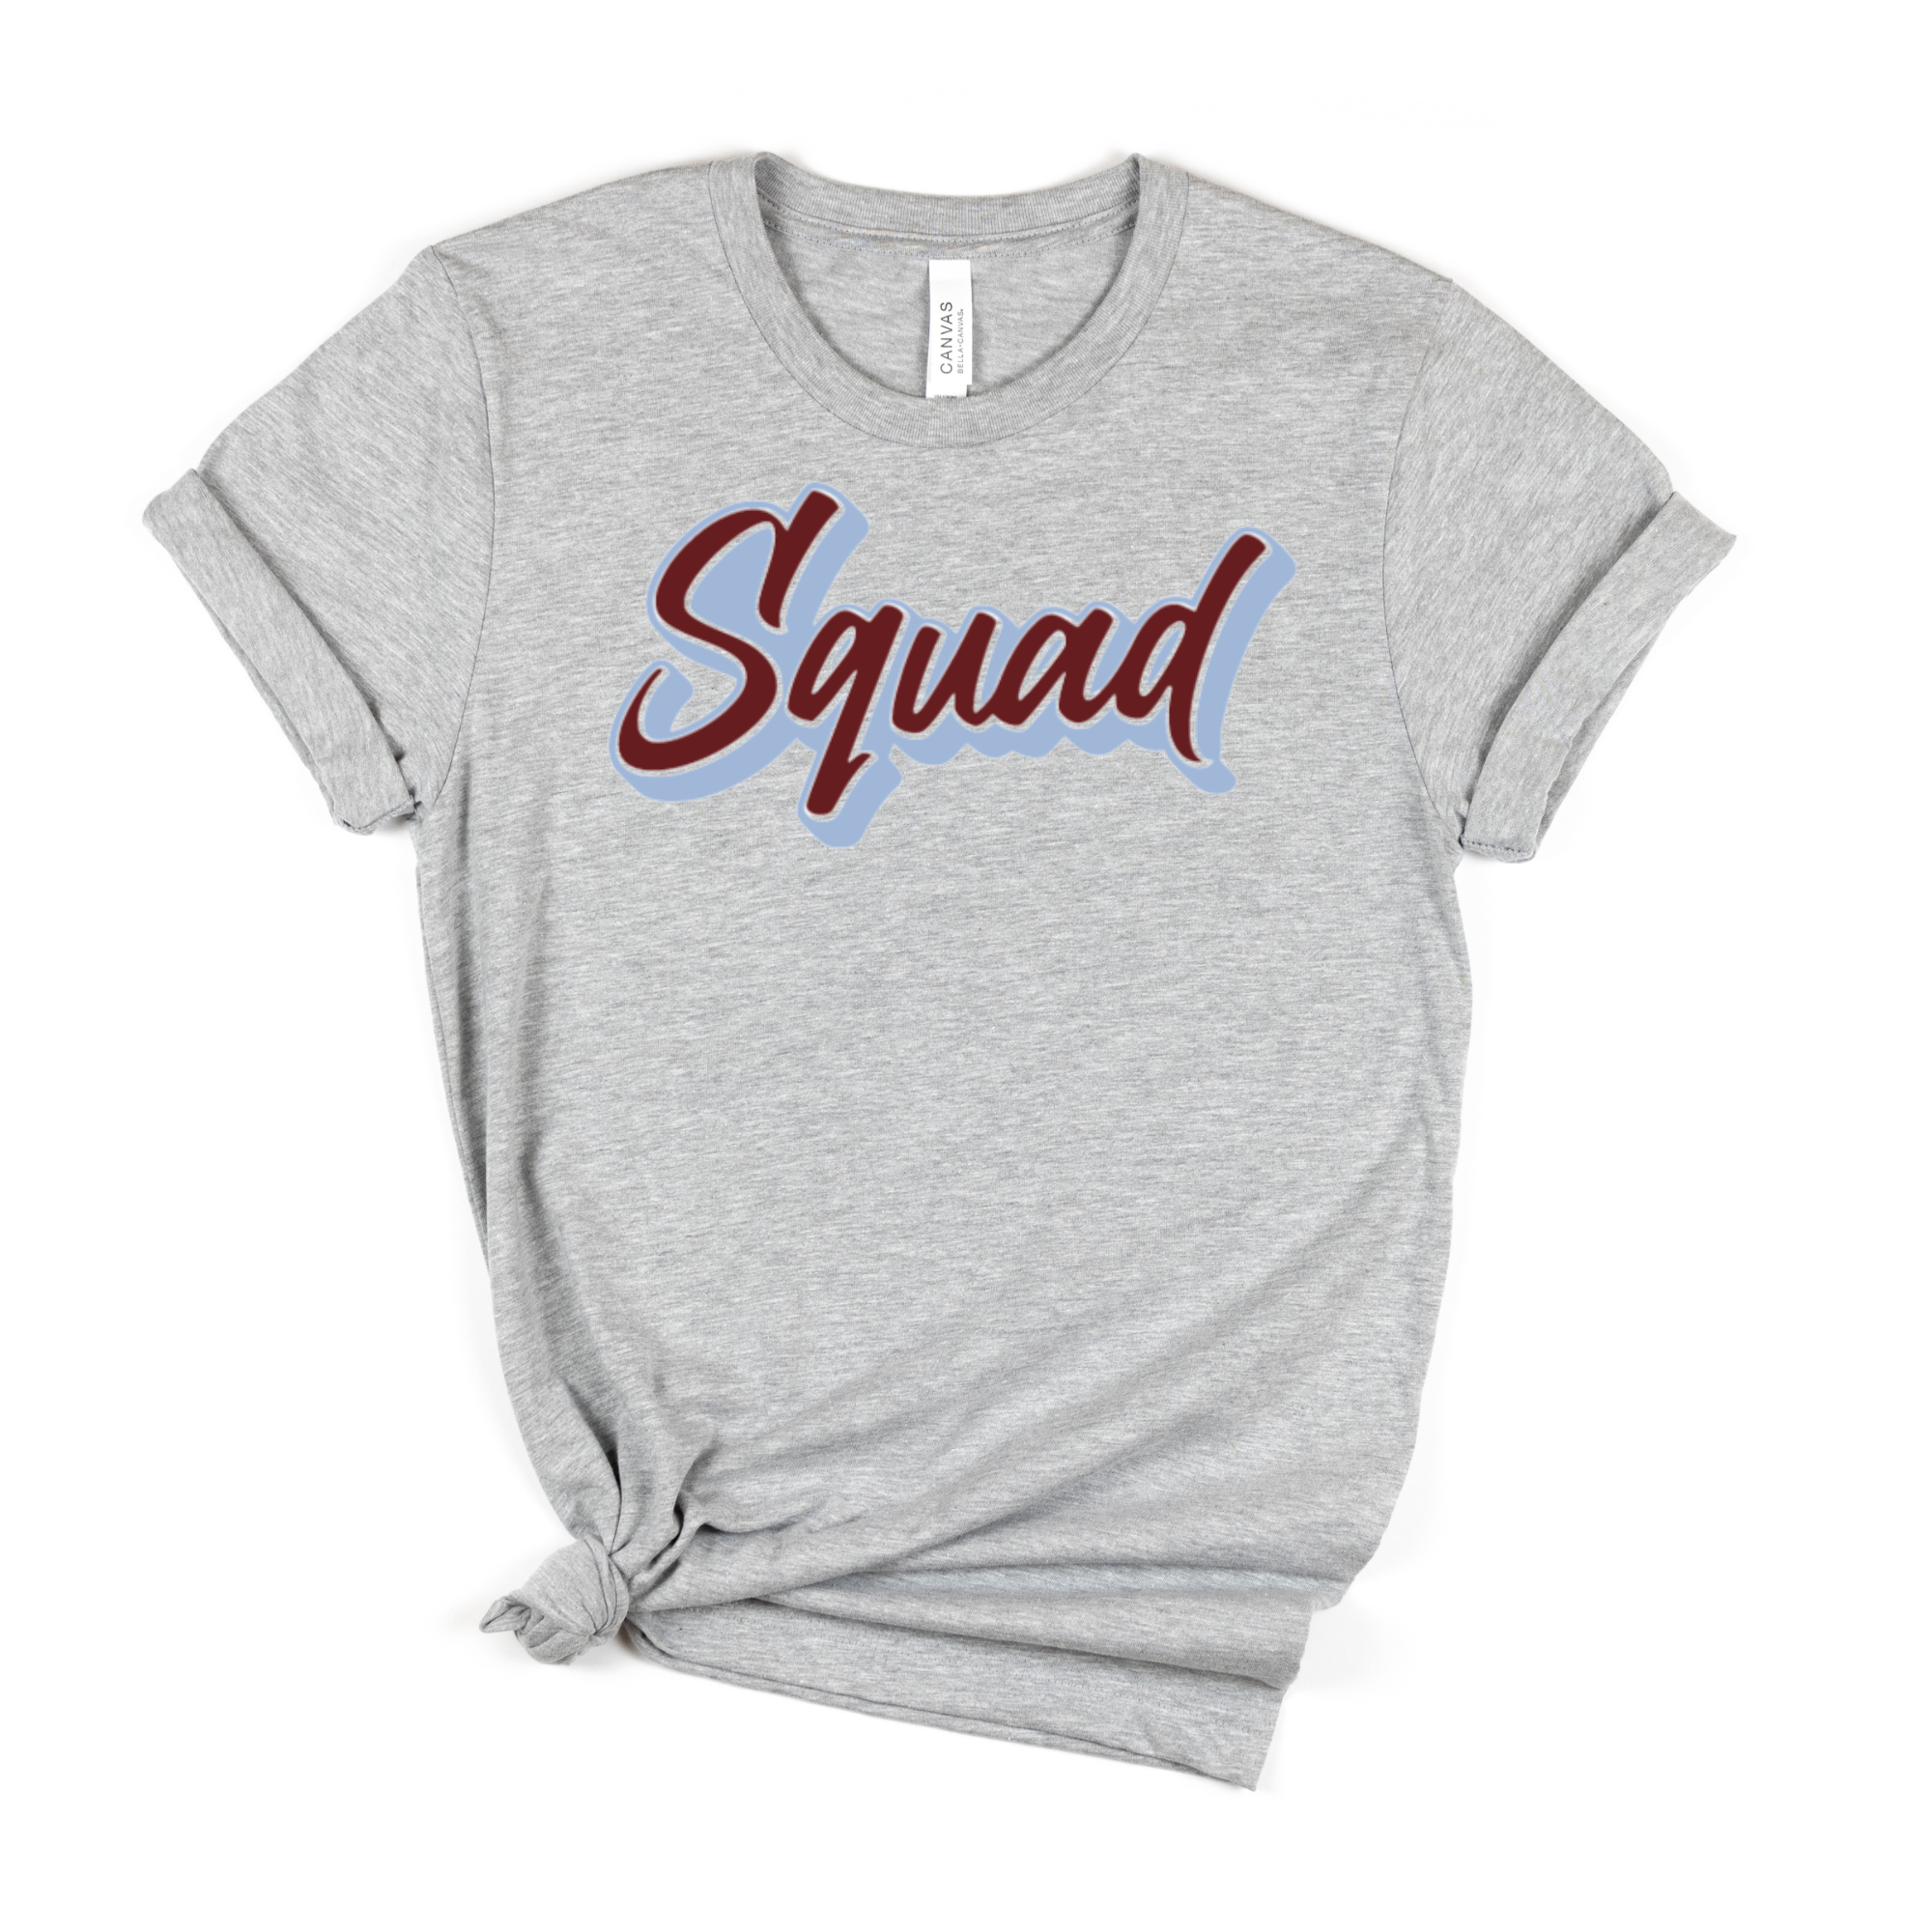 Premier Squad "Squad" Gray Shirt